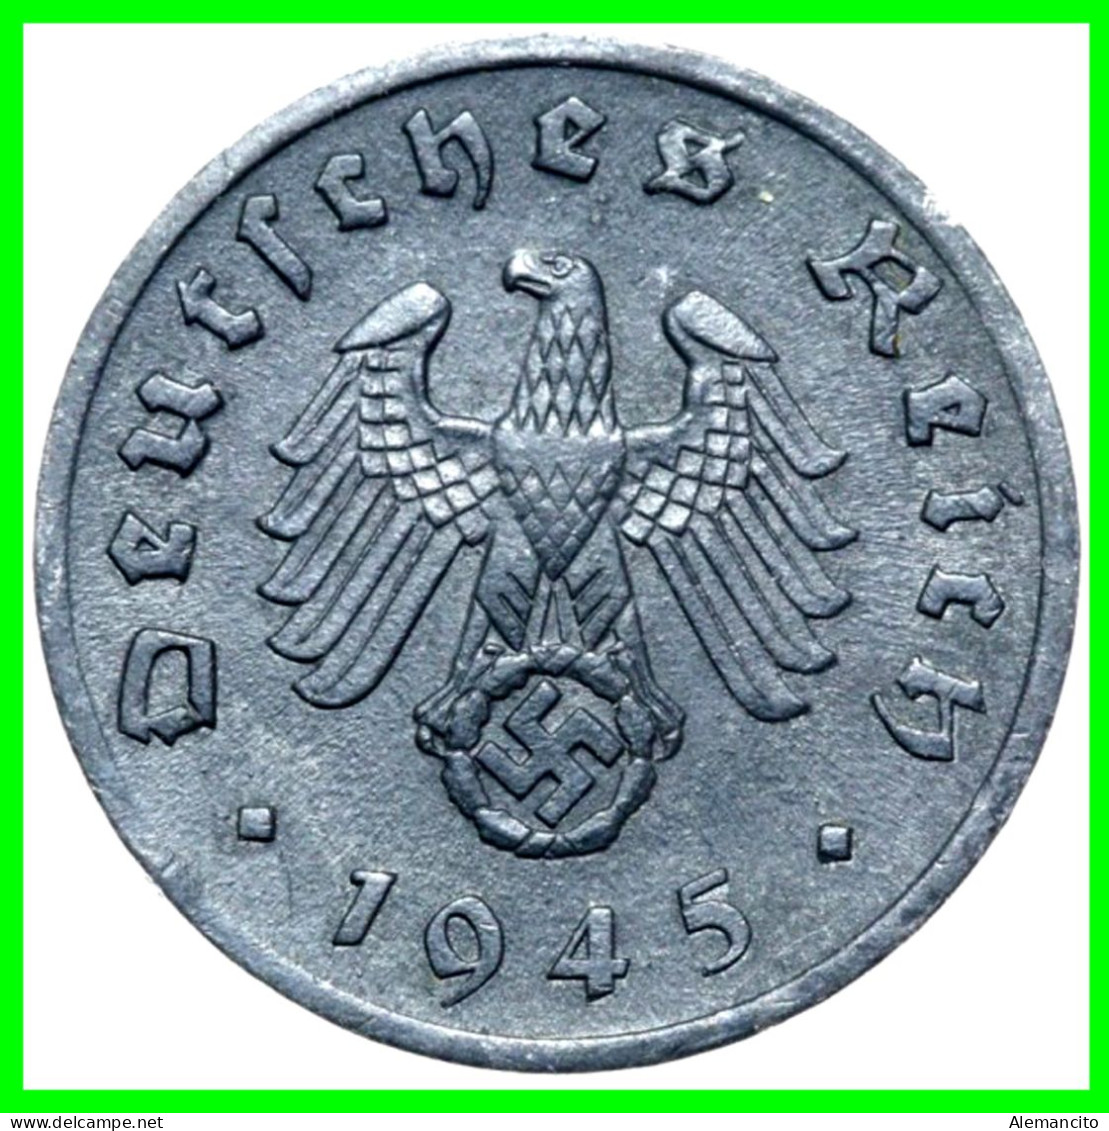 ALEMANIA - GERMANY SERIE DE 2 MONEDAS DE 1 REICHSPFNNIG TERCER REICHS ( AÑO 1945 CECAS (  - A -  E -  )  COMPOCISIÓN ZIN - 1 Reichspfennig